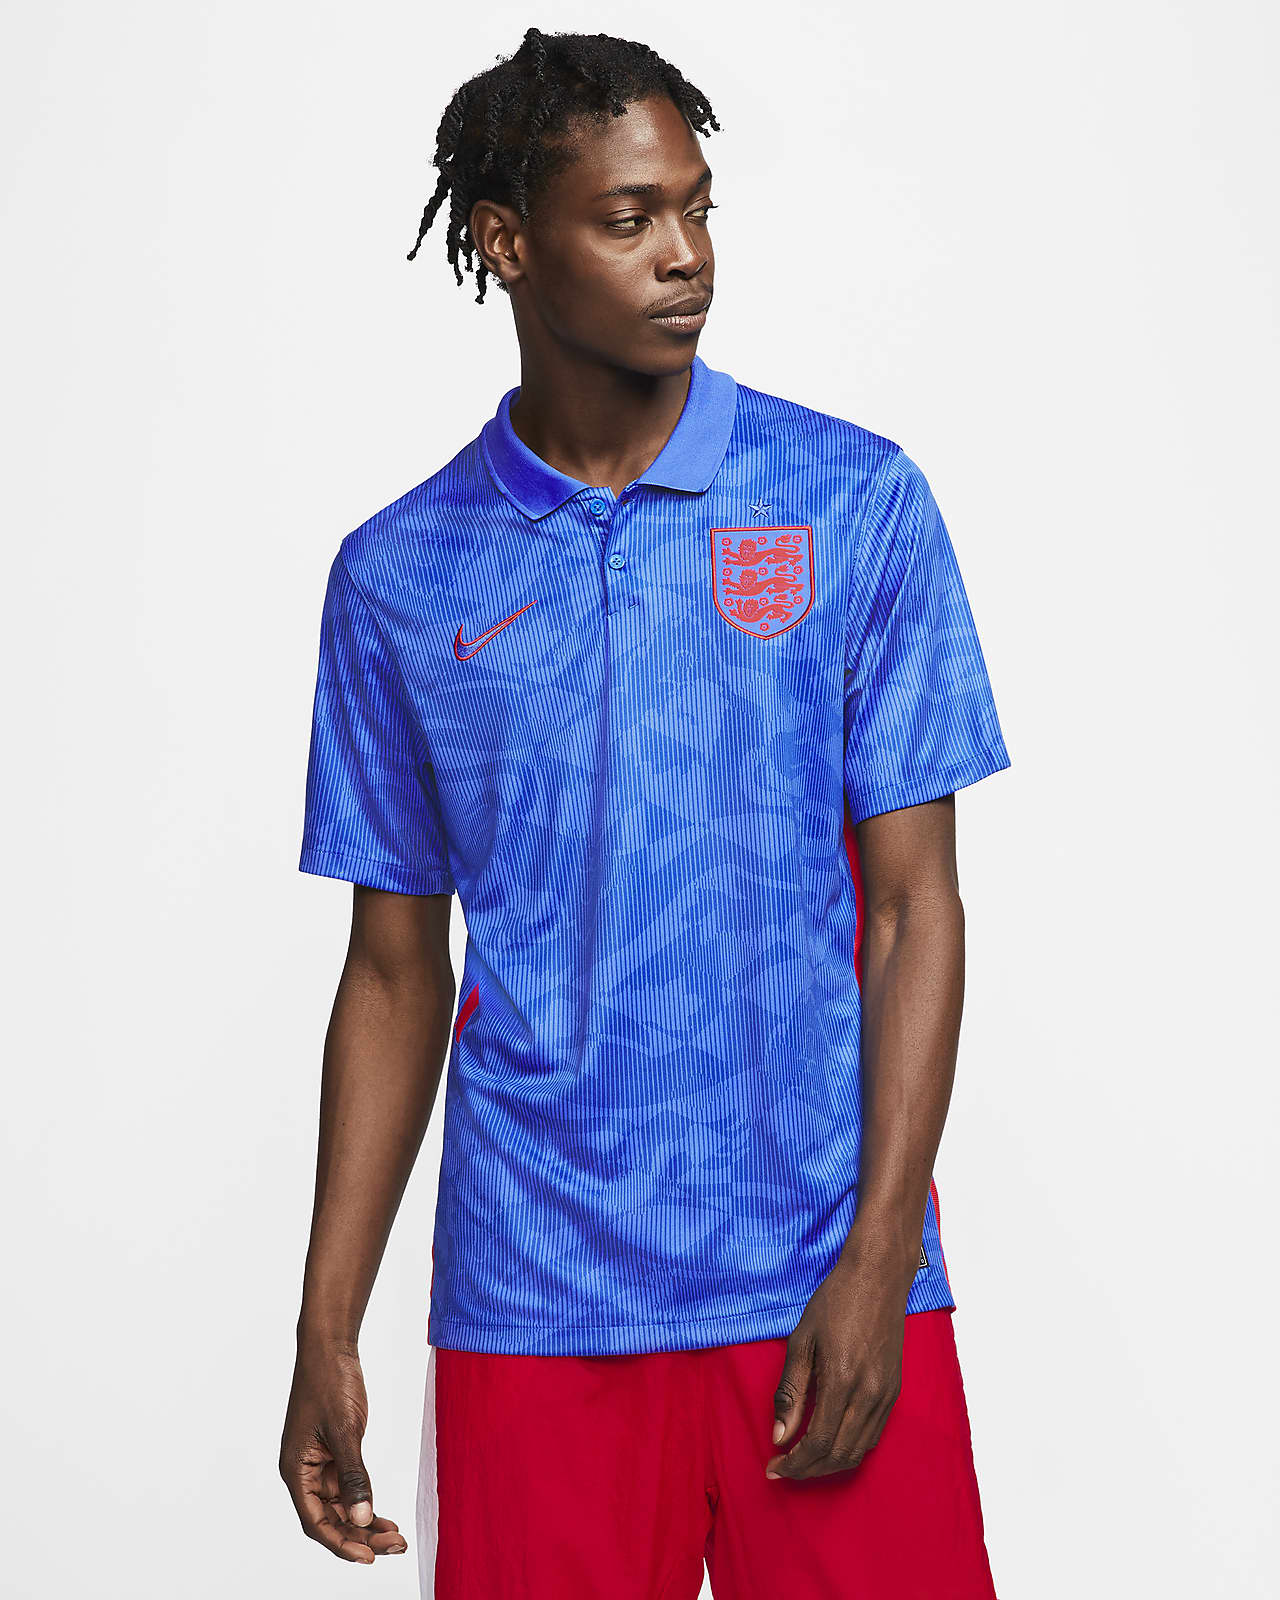 Nike公式 イングランド スタジアム アウェイ メンズ サッカーユニフォーム オンラインストア 通販サイト